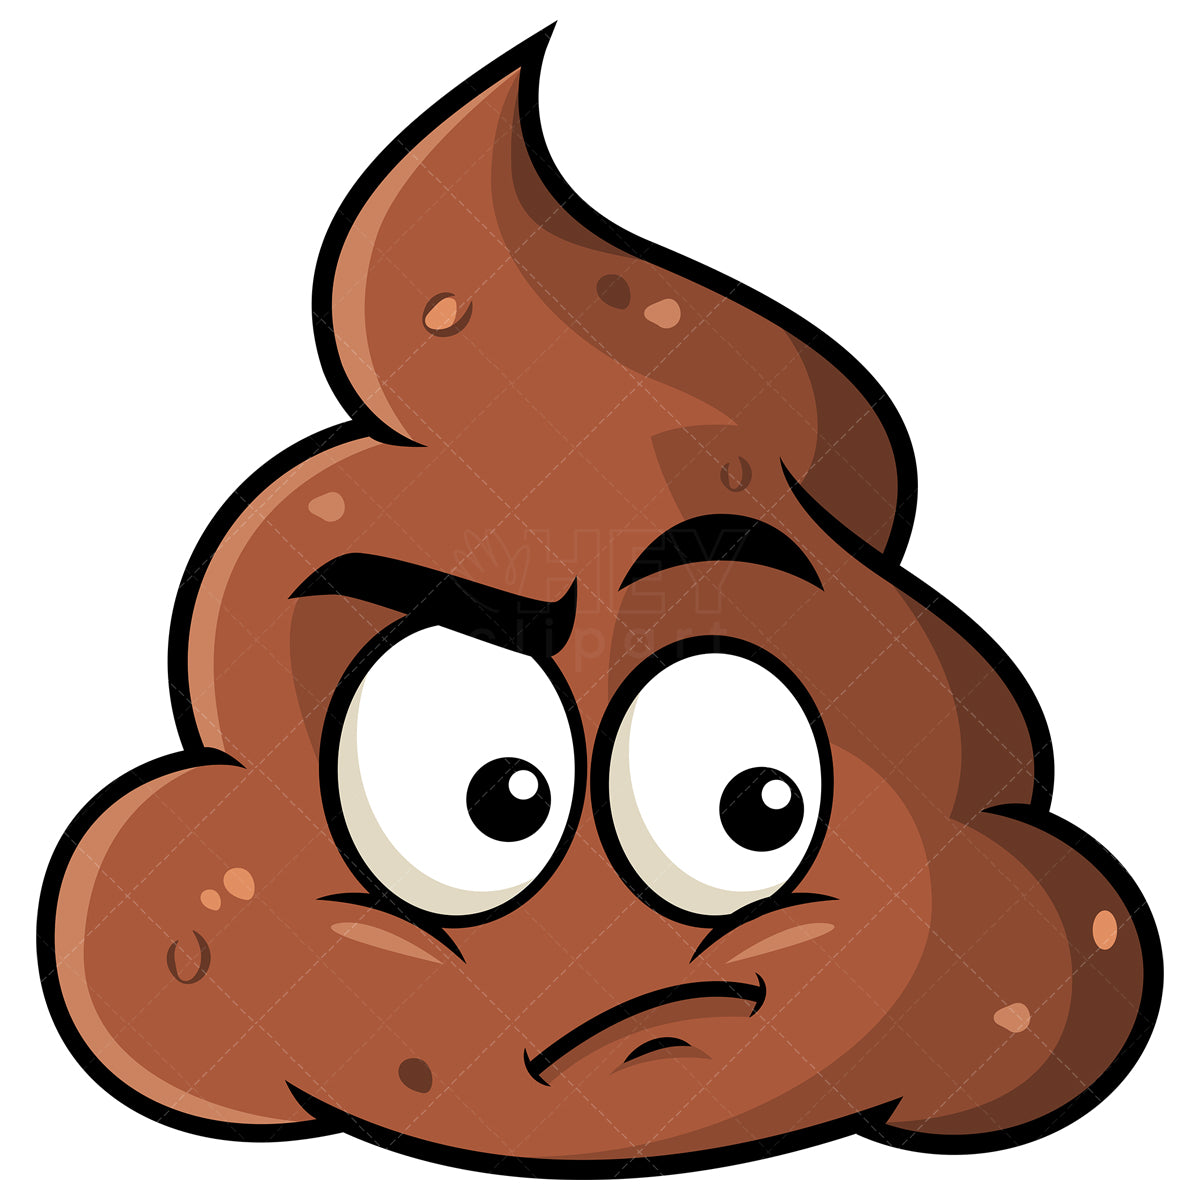 Royalty-free stock vector illustration of a irritated poop emoji.